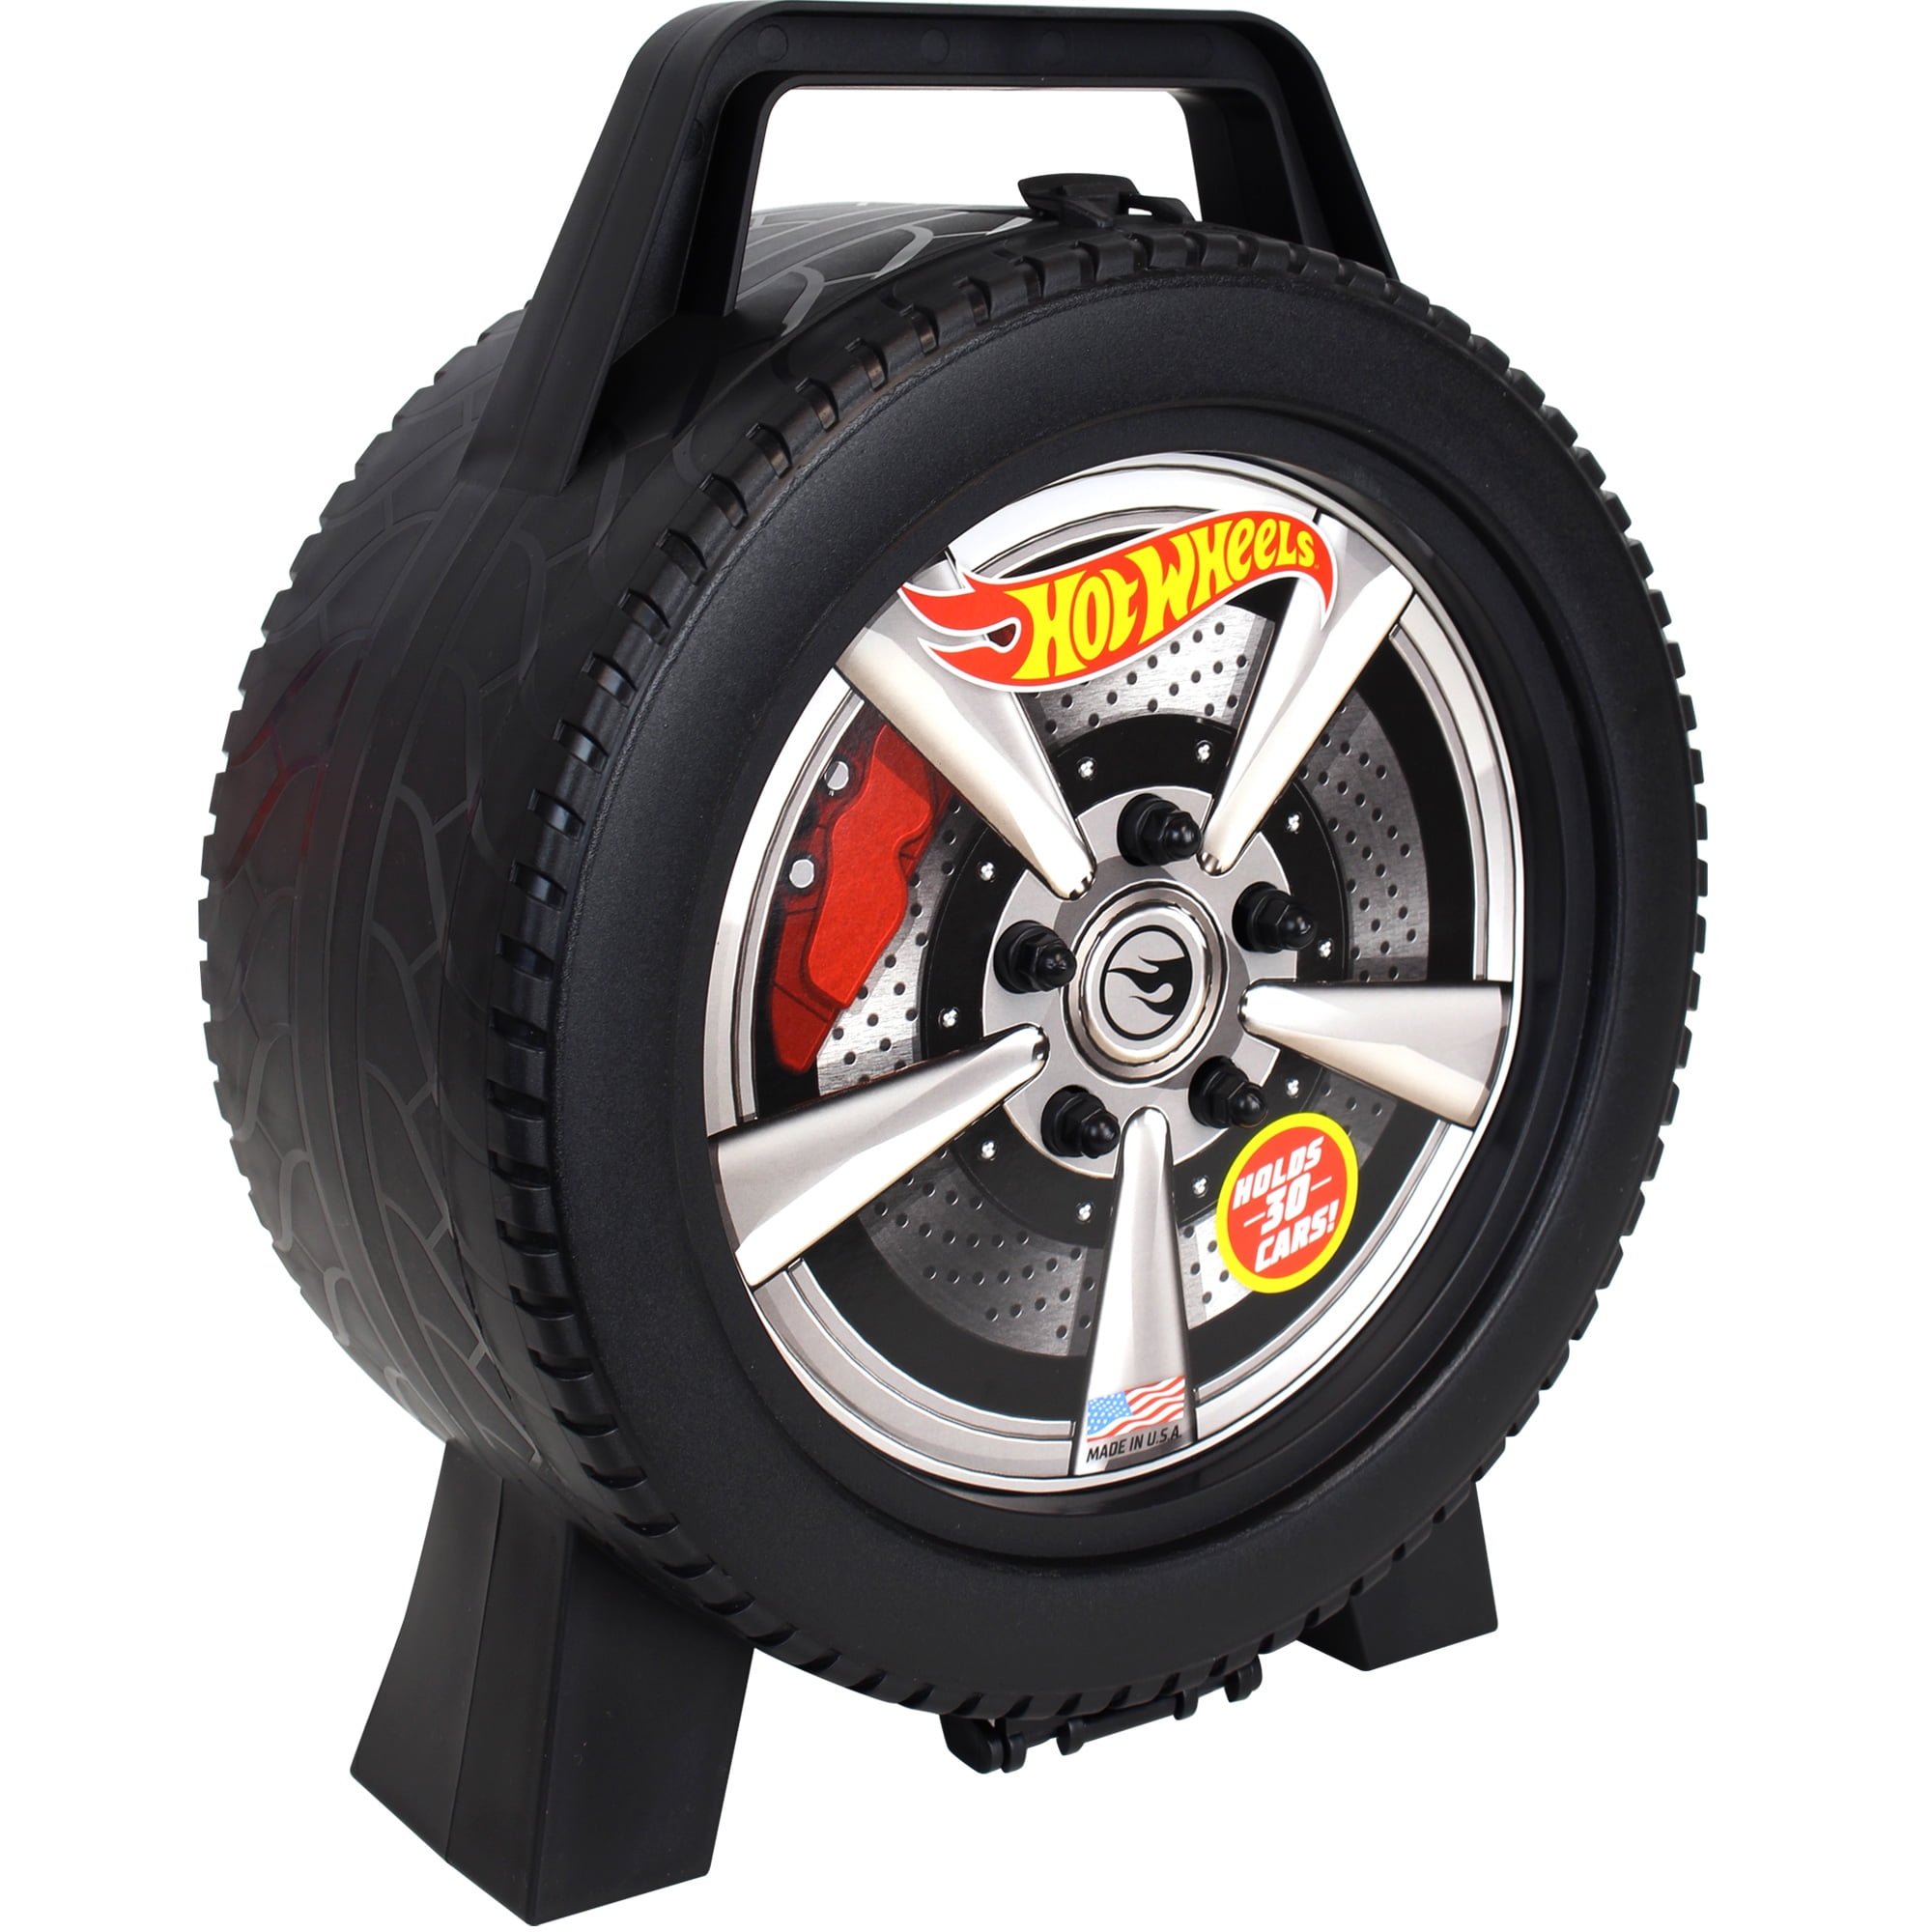 Hot Wheels Storage Case w/Hot Wheels - toys & games - by owner - sale -  craigslist